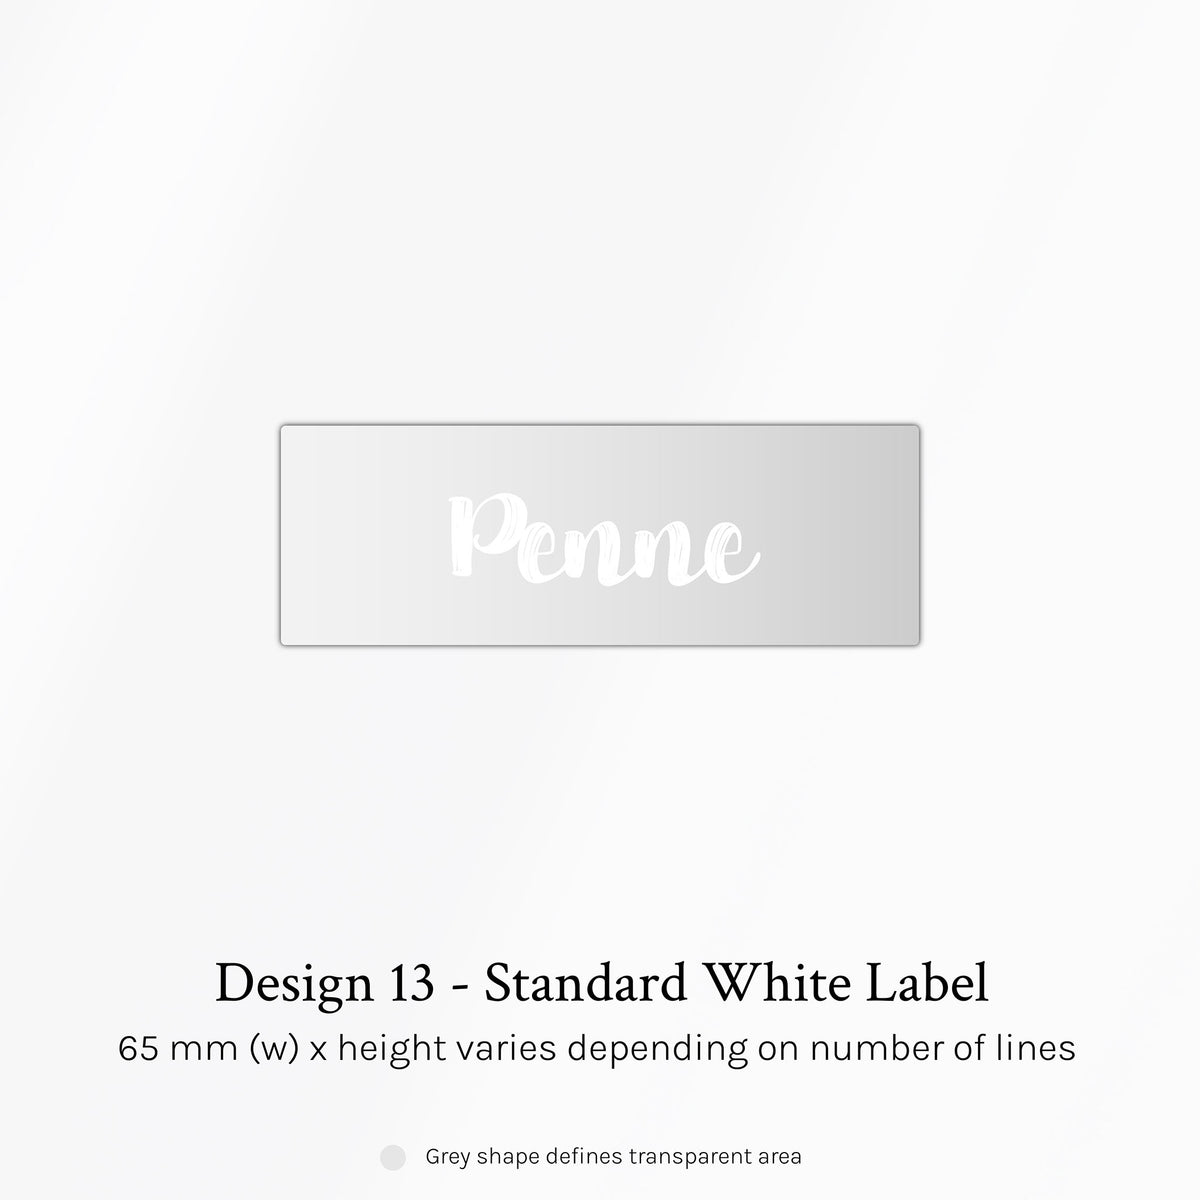 Custom Pantry Labels (Design 1 - Design 25)